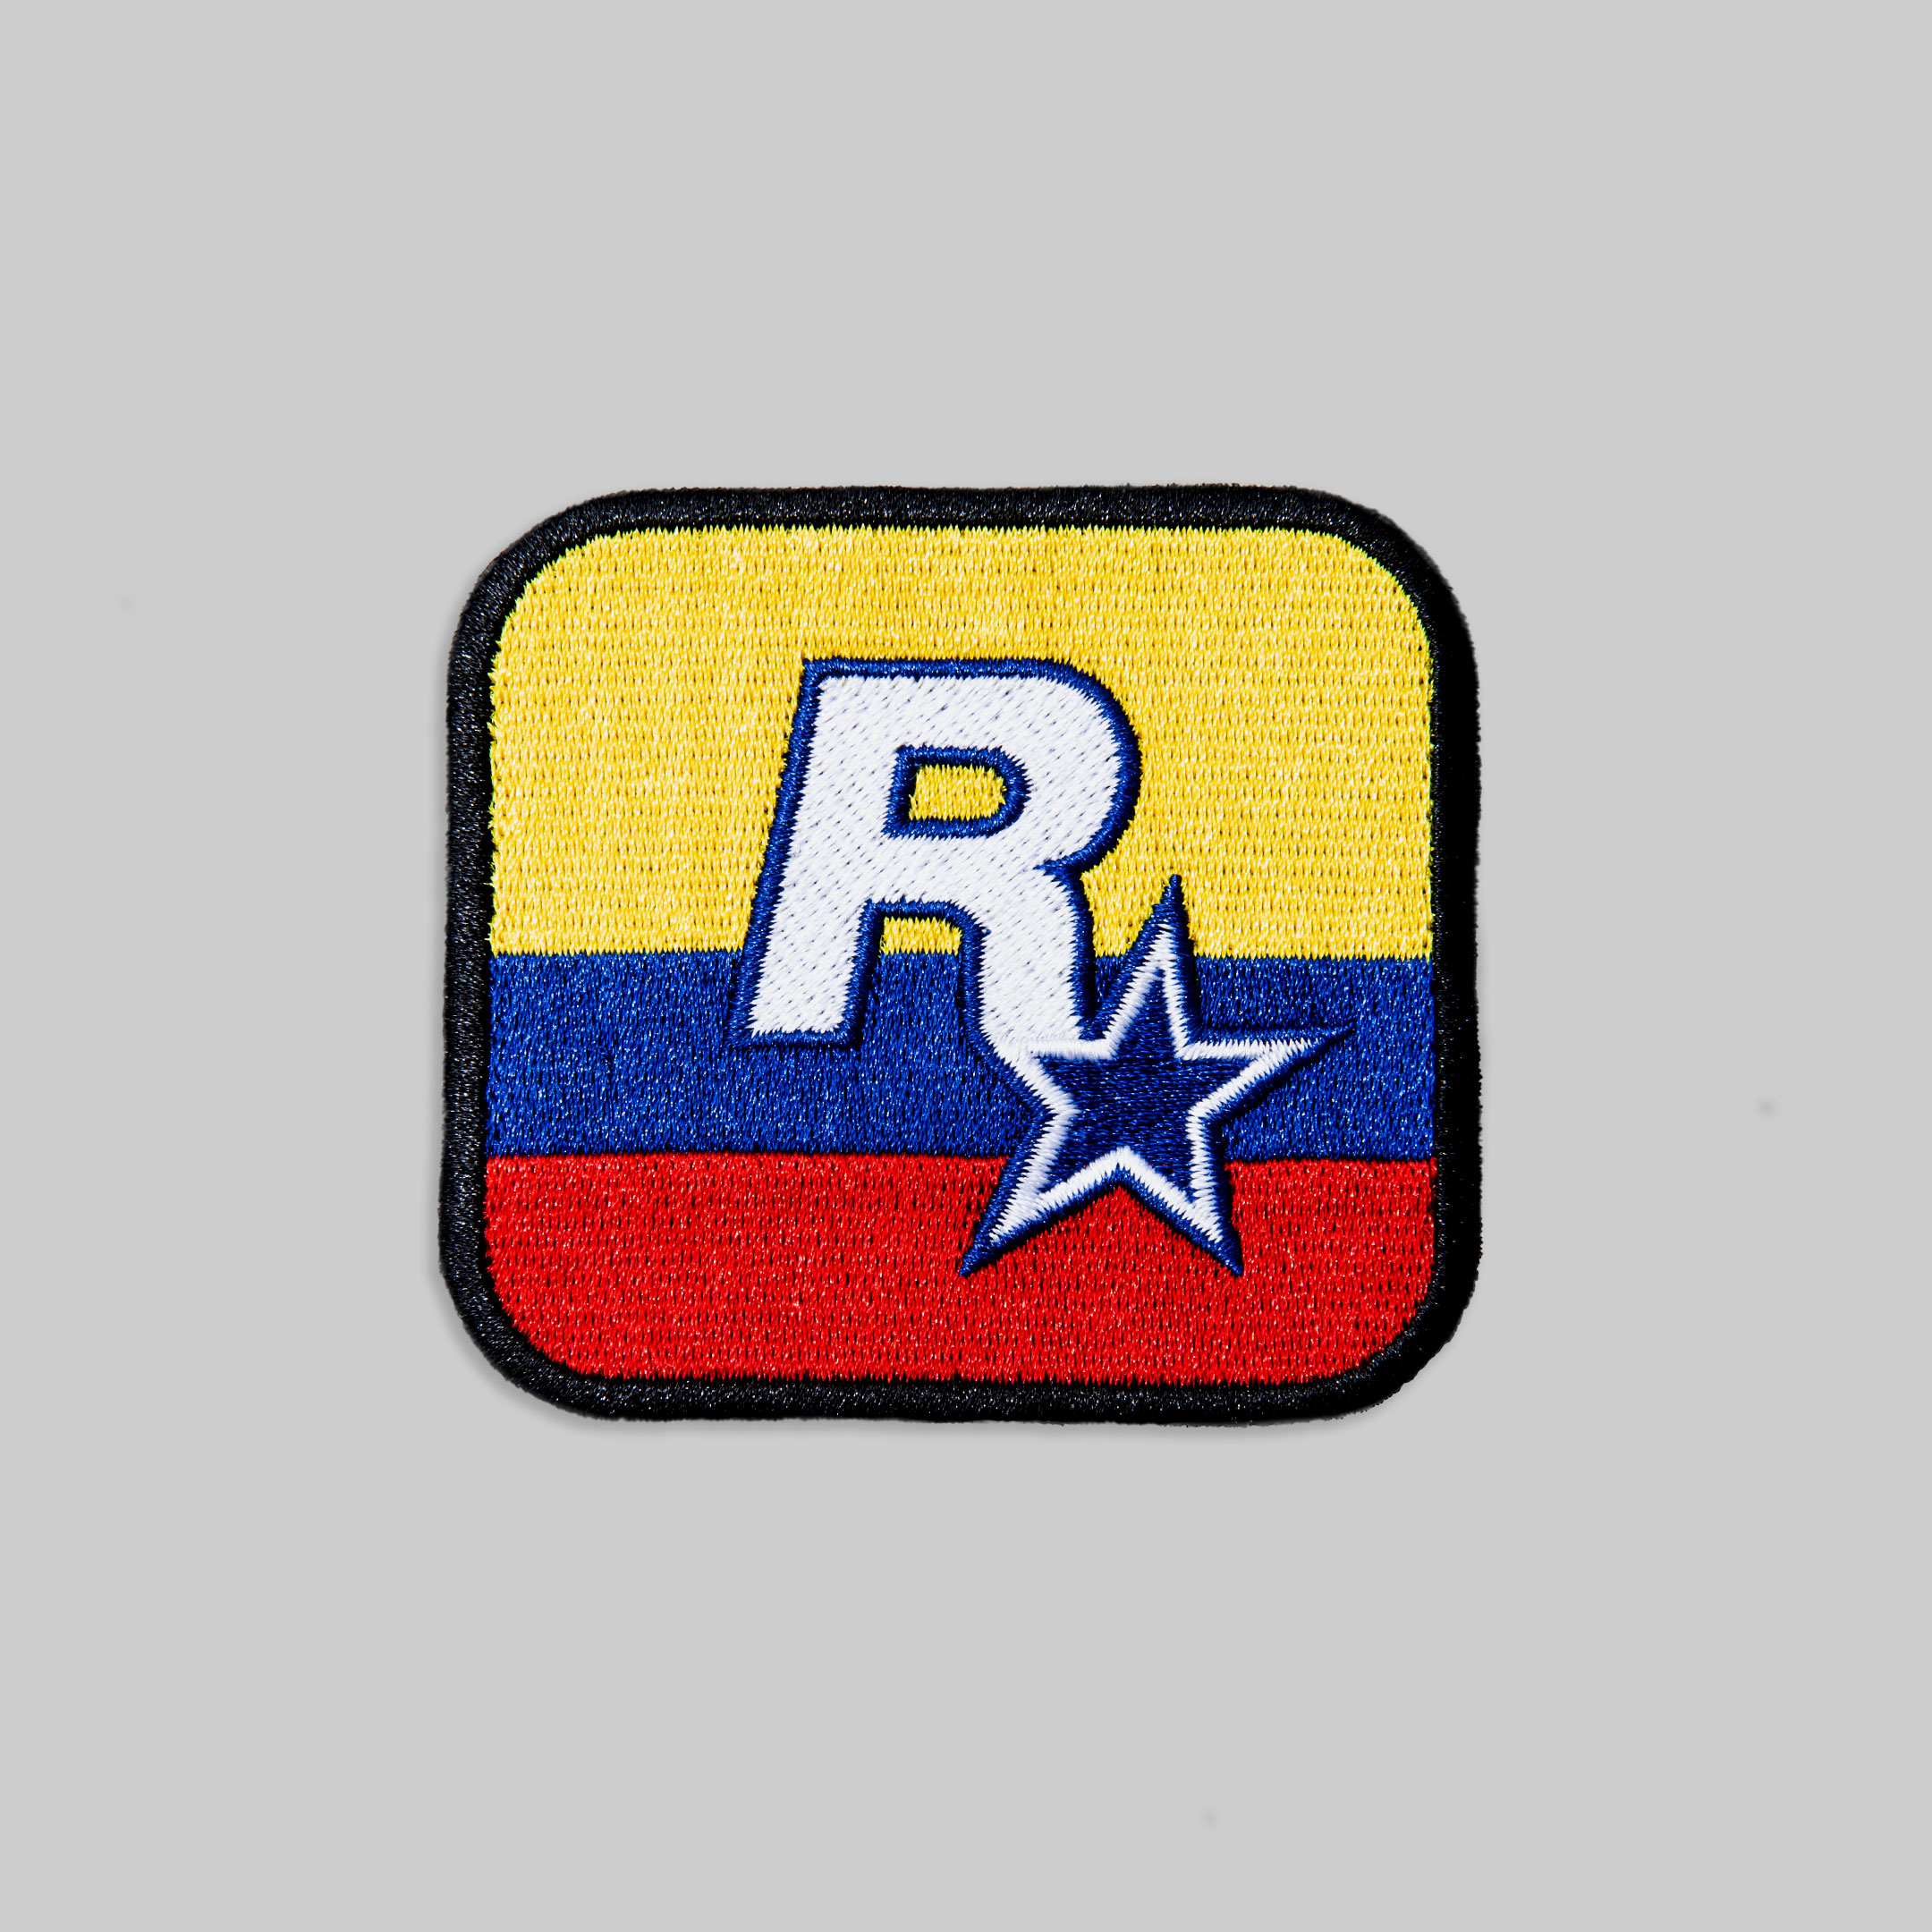 Selective Focus Rockstar Games Logo Prominent Stock Photo 2321397833